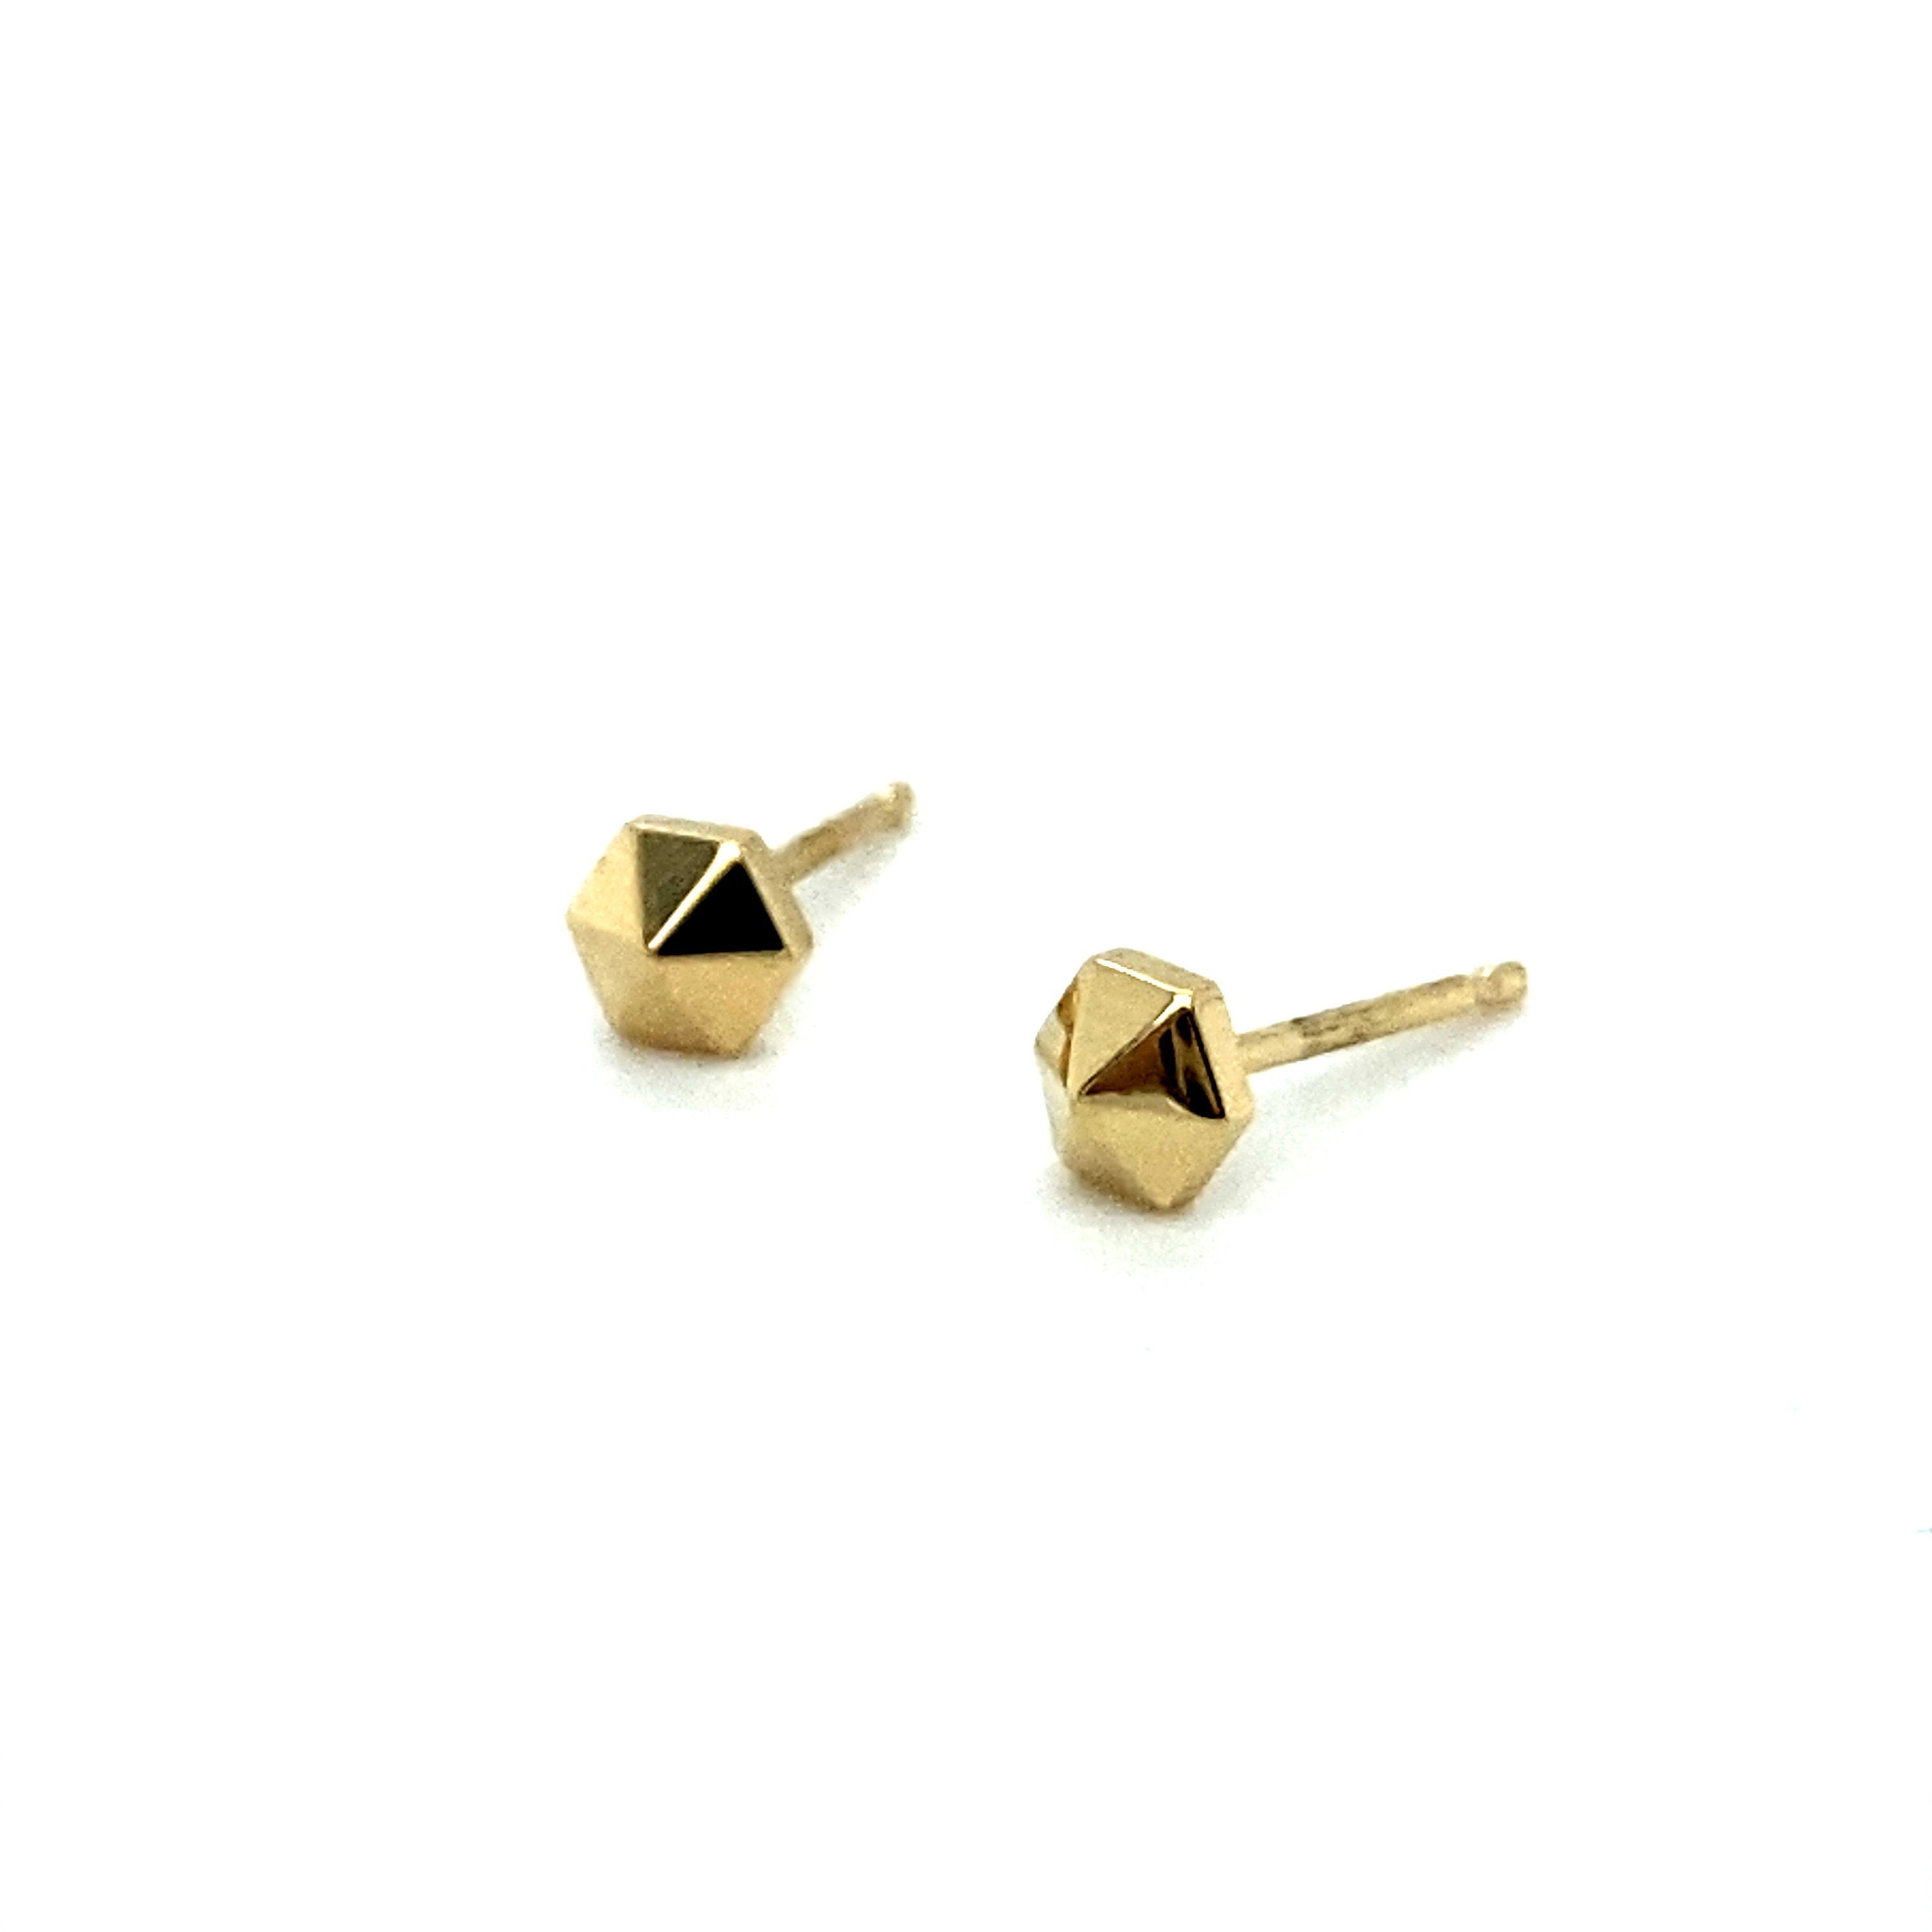 Hexagon Stud Earrings, Solid 14K Gold Hexagon Studs, Geometric Earrings, Small Gold Studs.